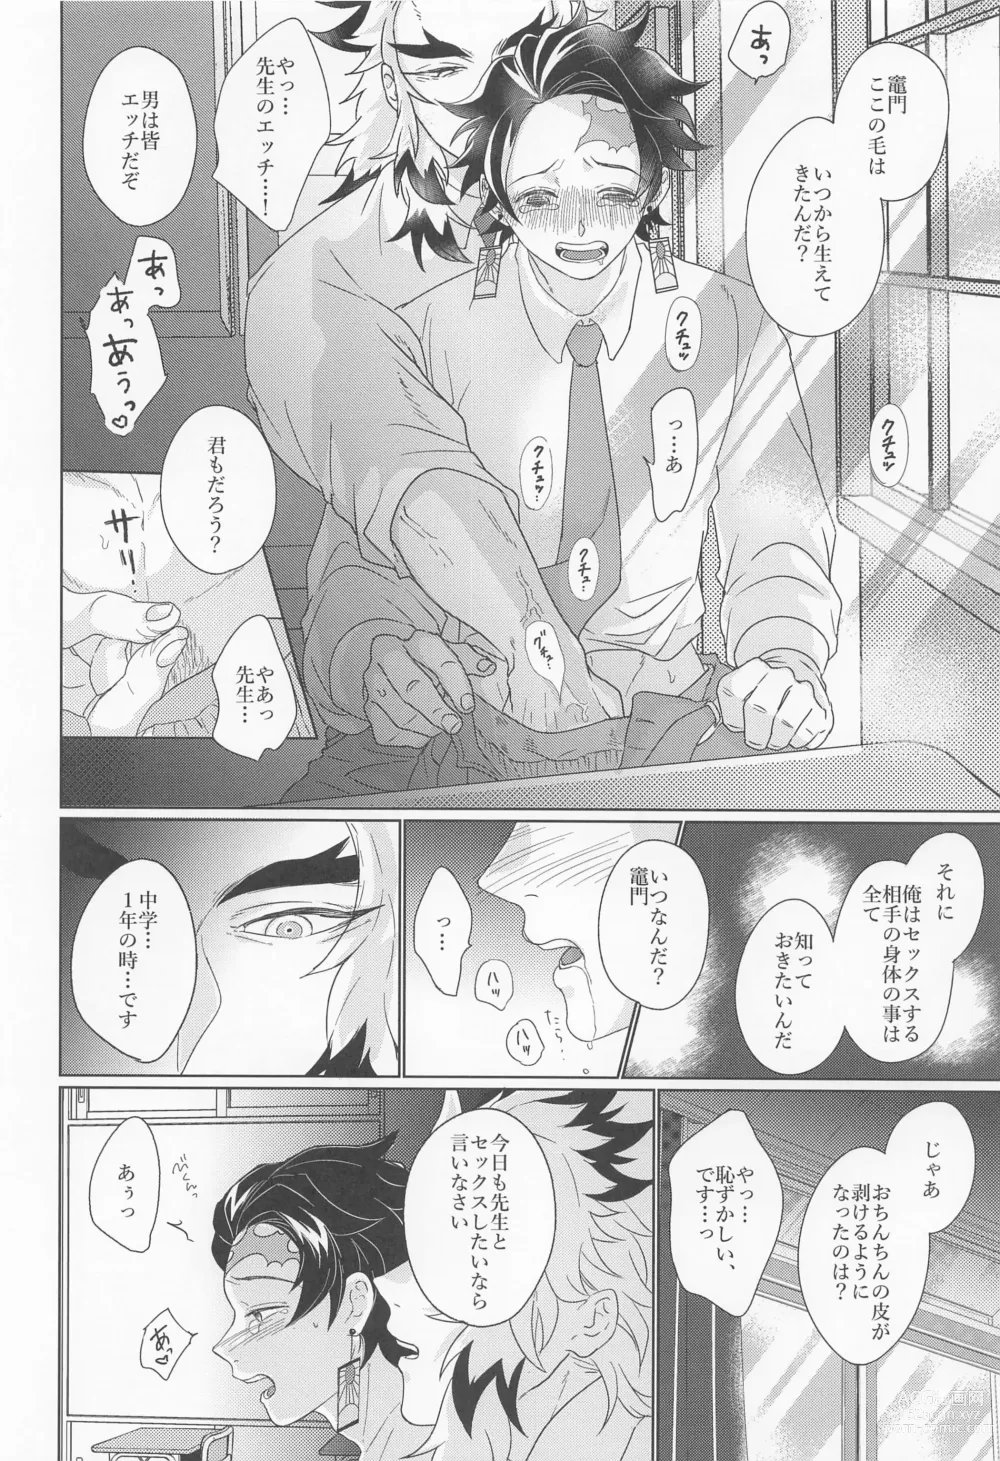 Page 5 of doujinshi Kagerou